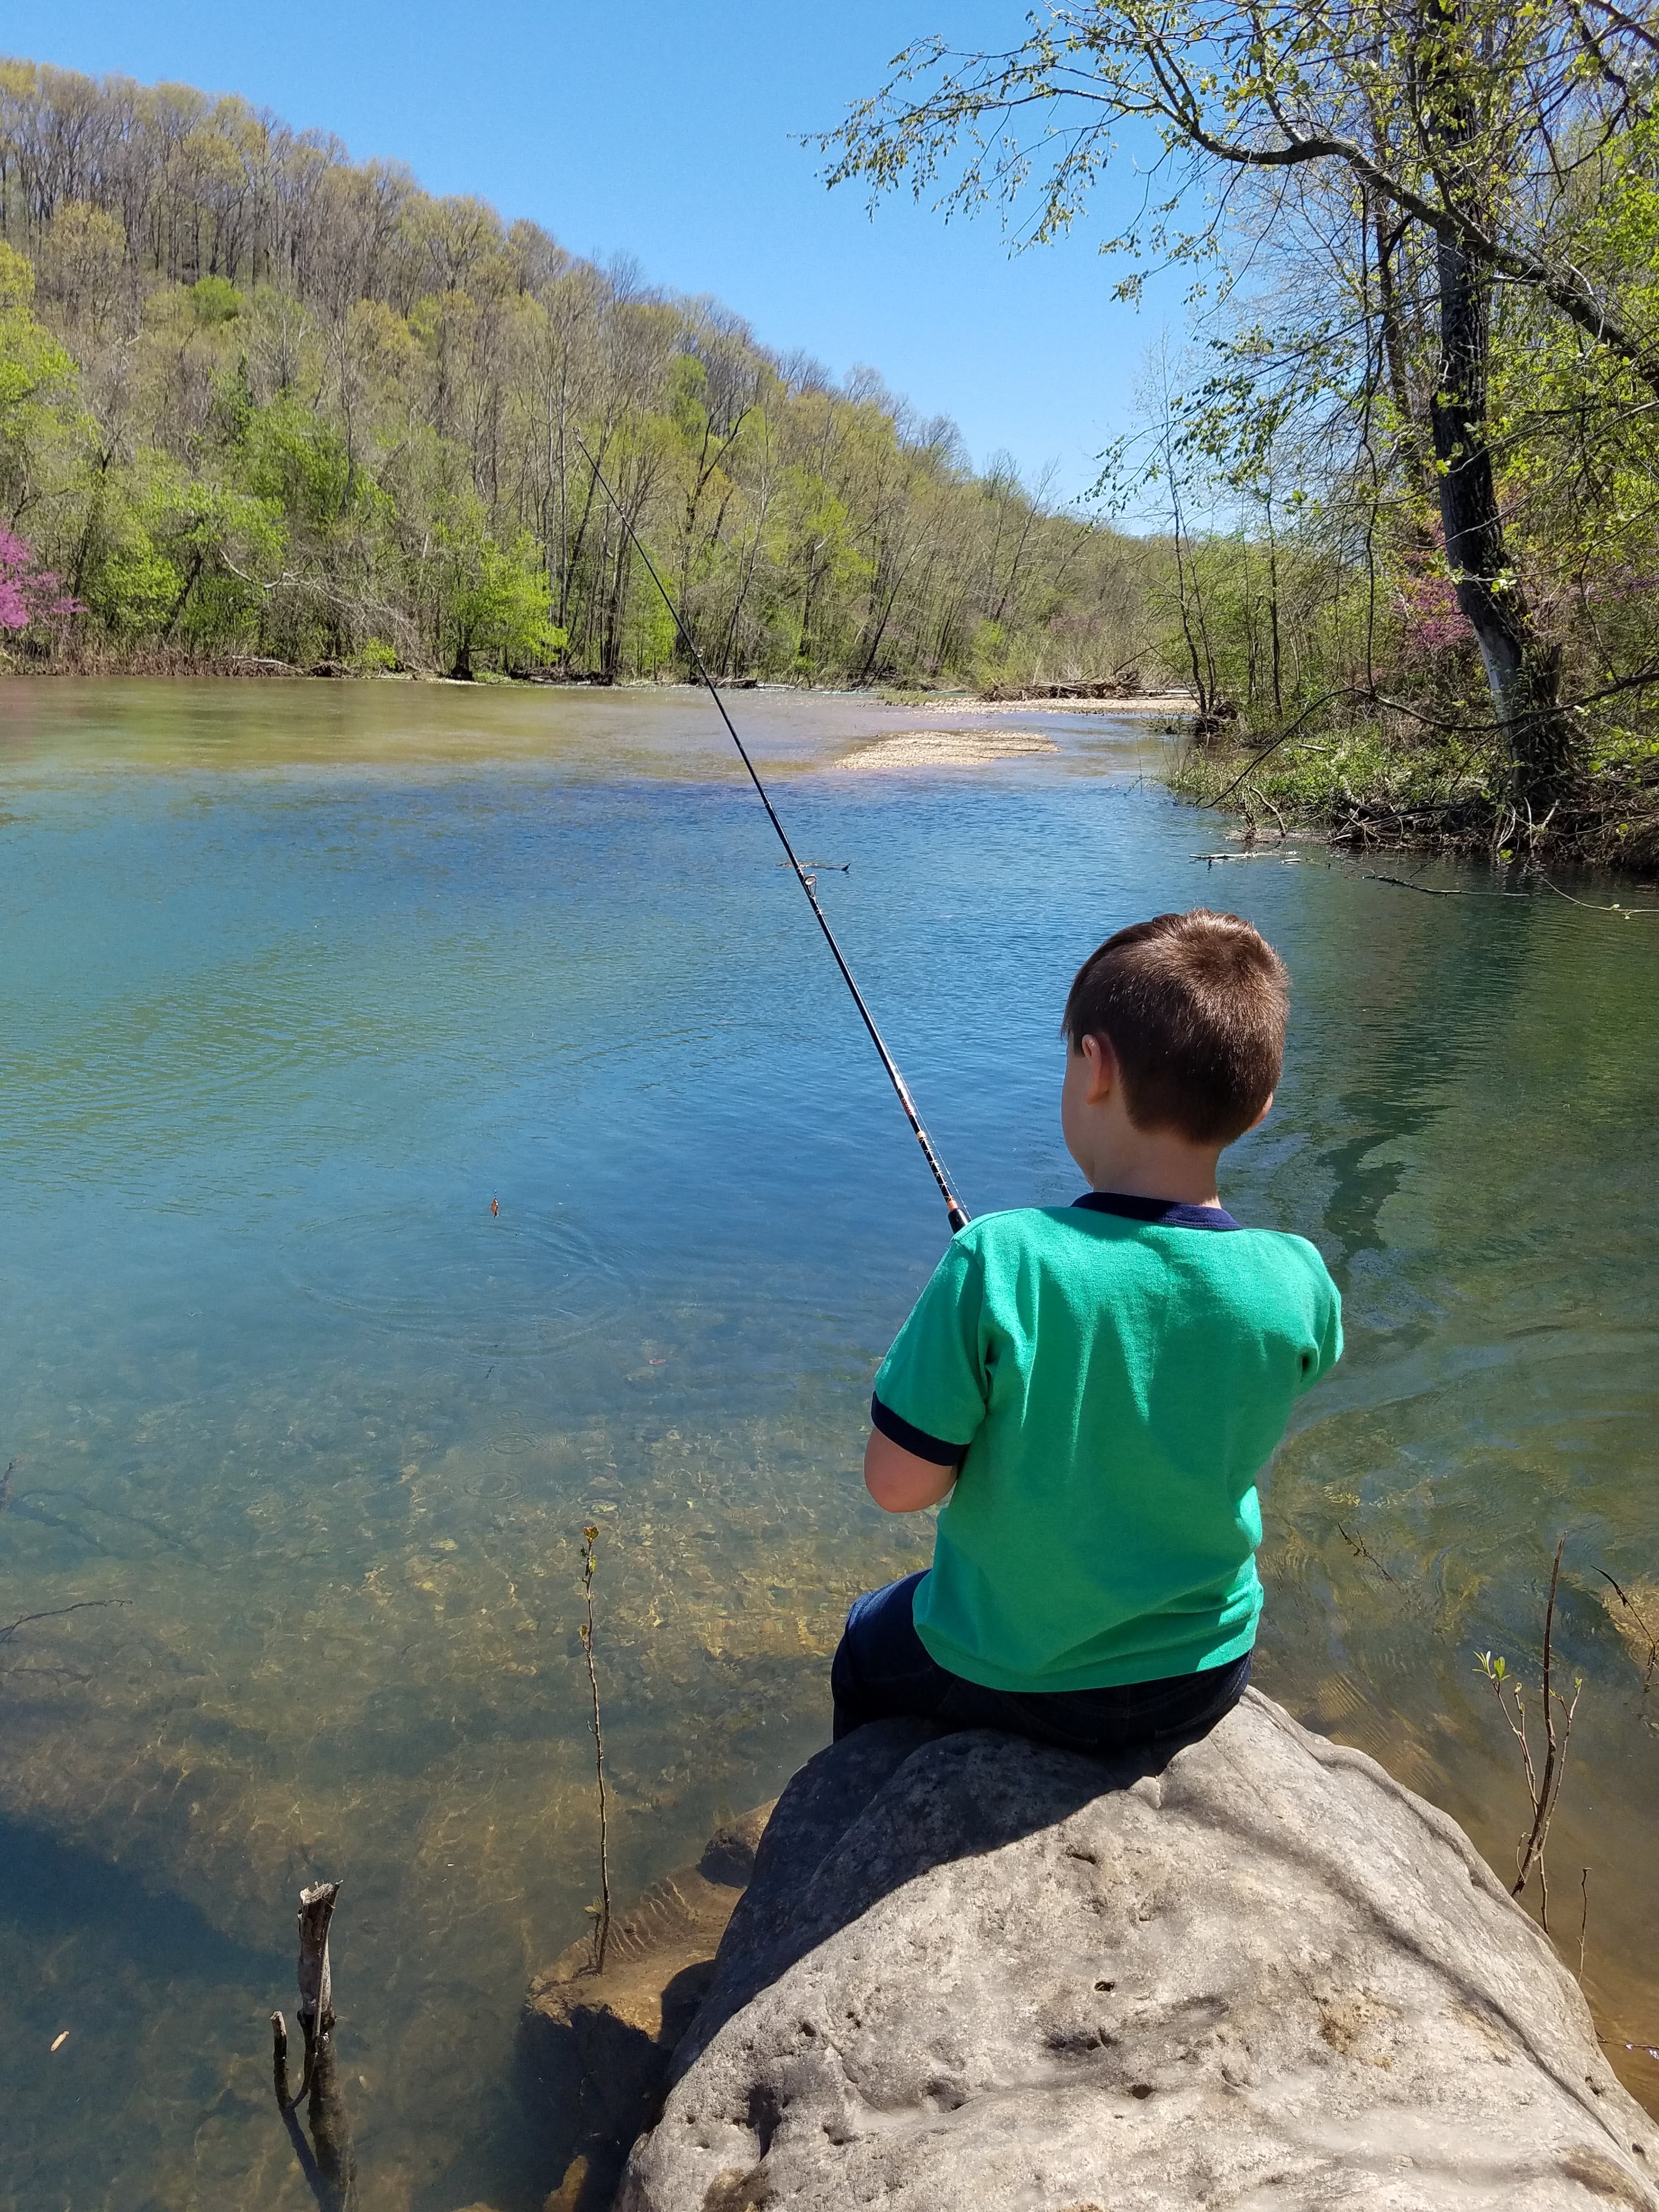 Our favorite fishing spot on Big Creek